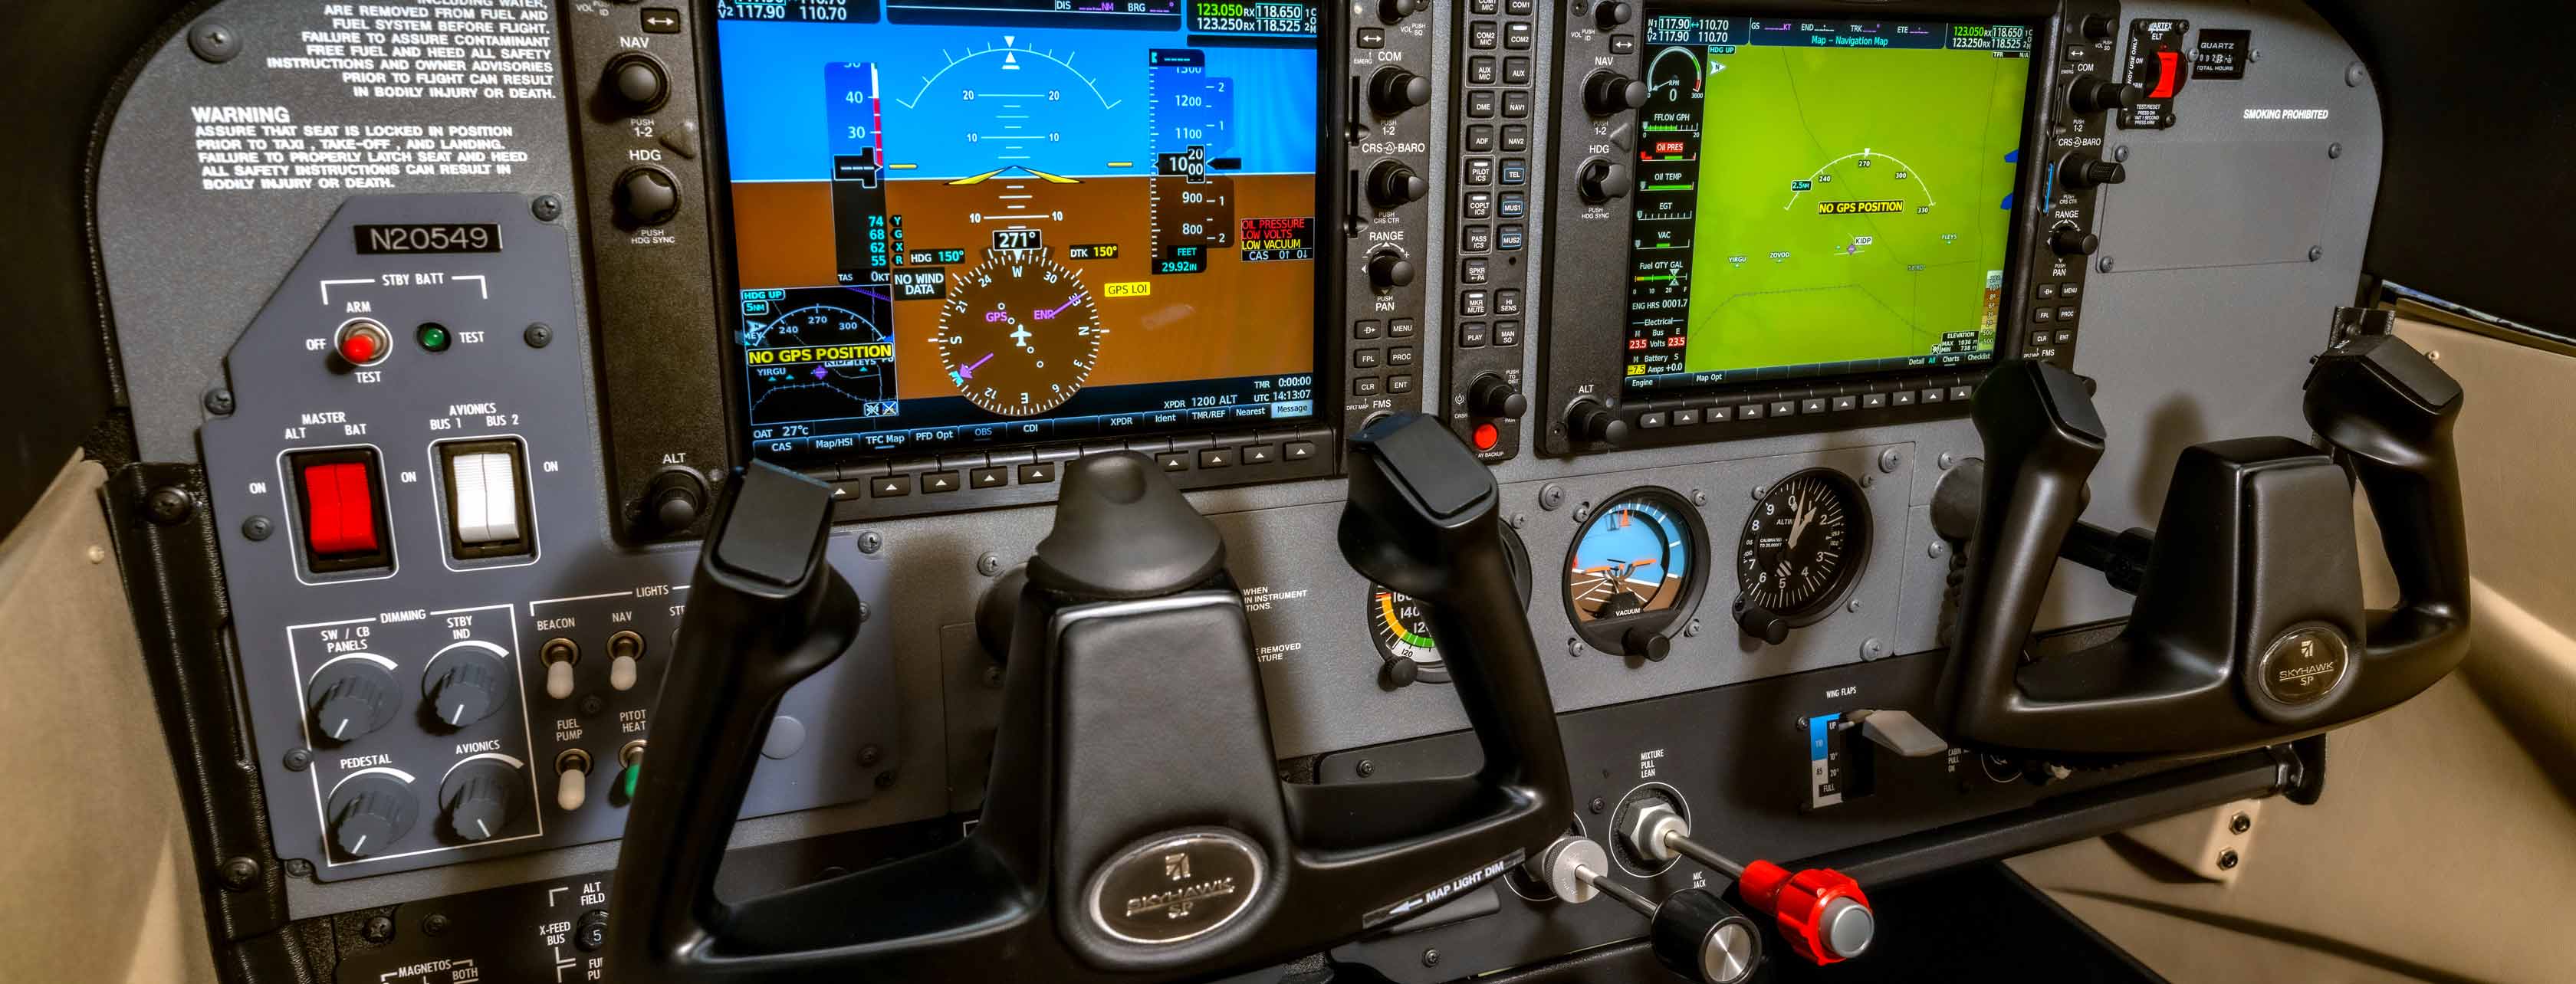 Cessna G1000 IFR Operation